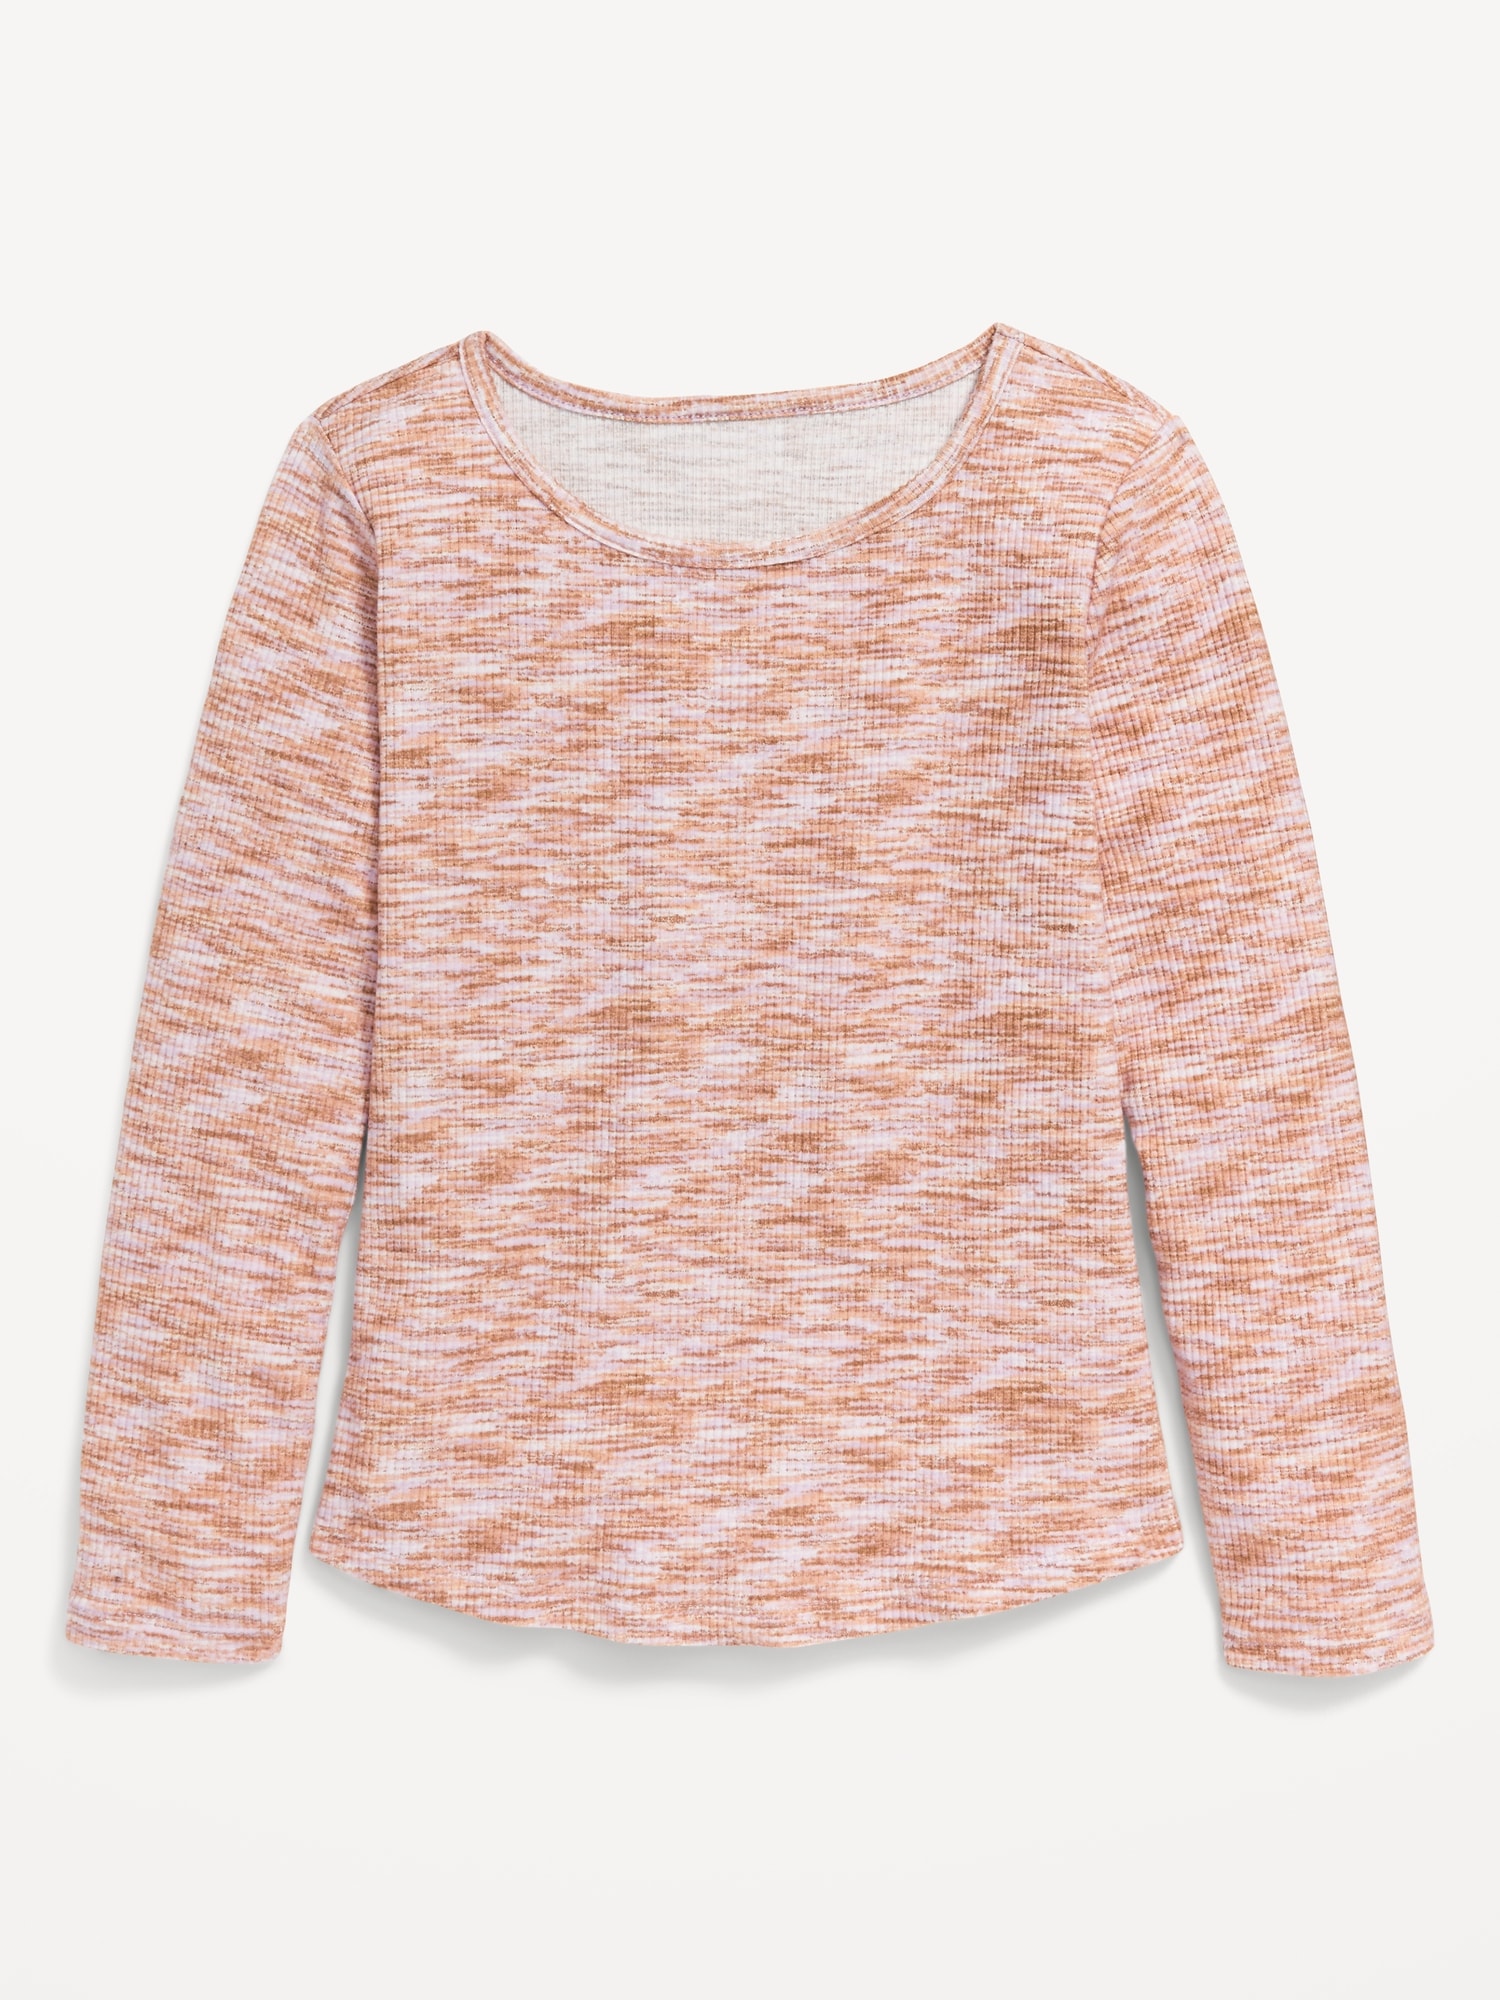 Cozy Long-Sleeve T-Shirt for Girls